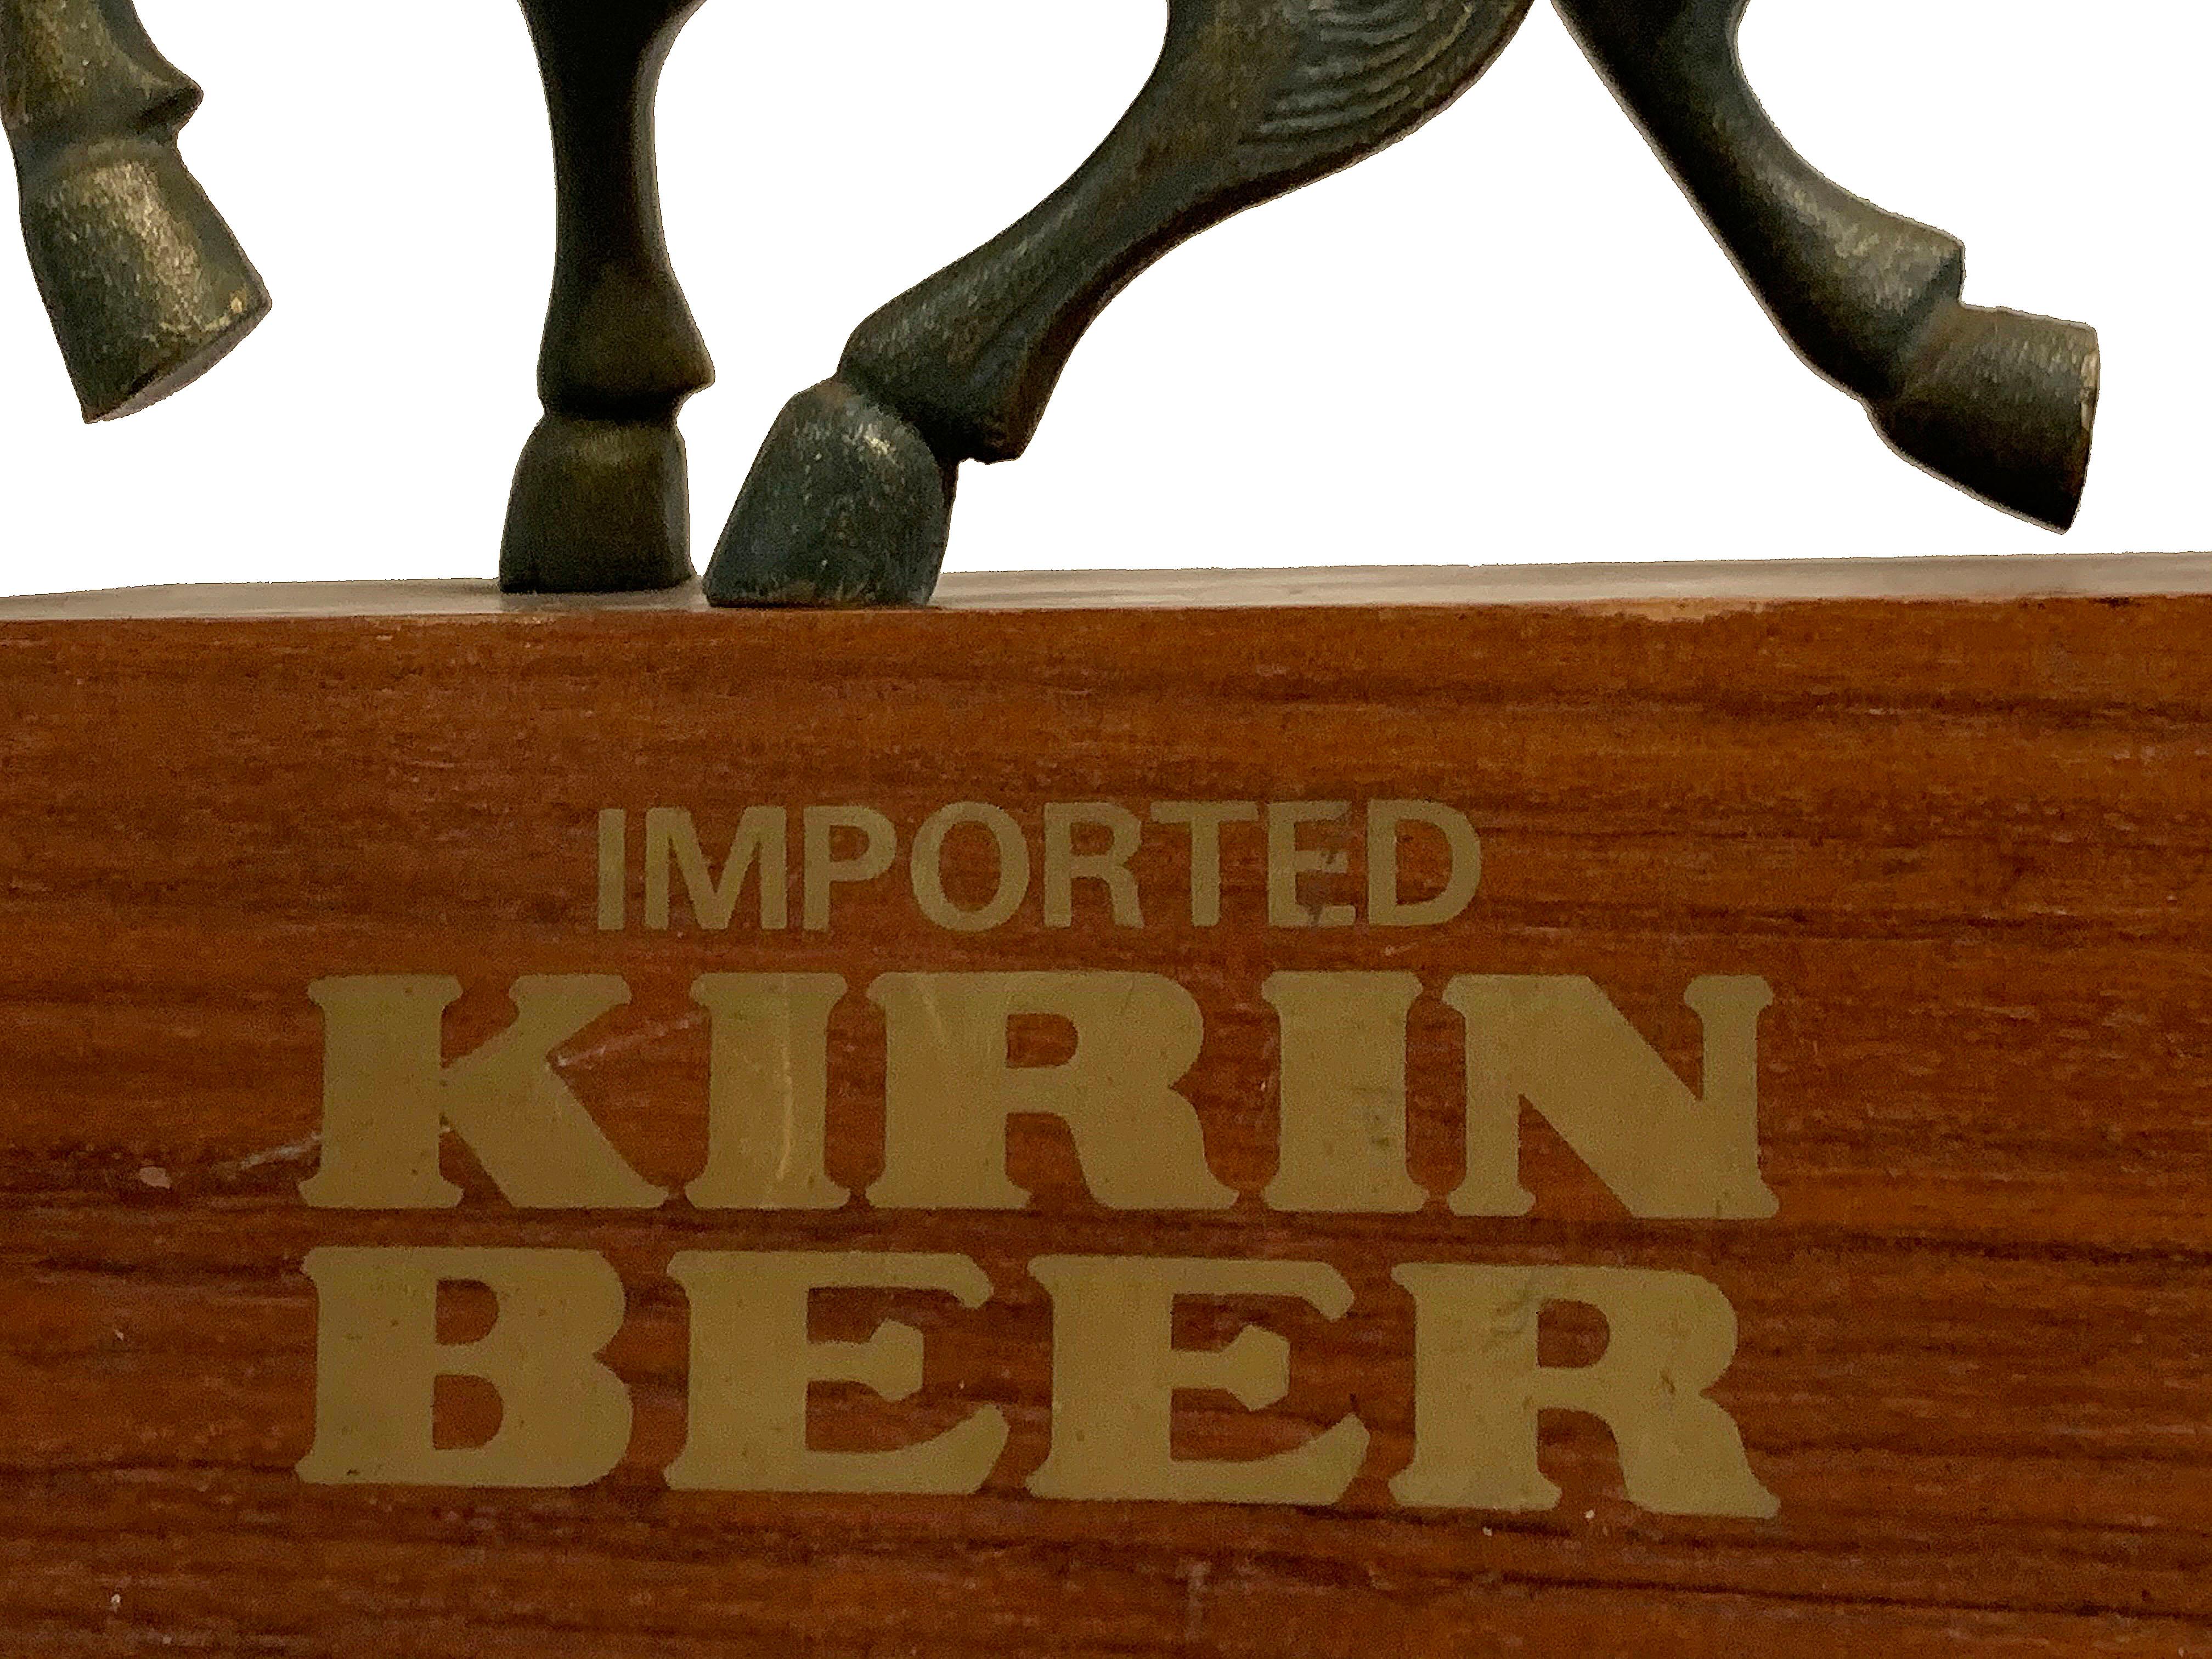 Metal on wood Imported Kirin beer sculpture. Base reads 